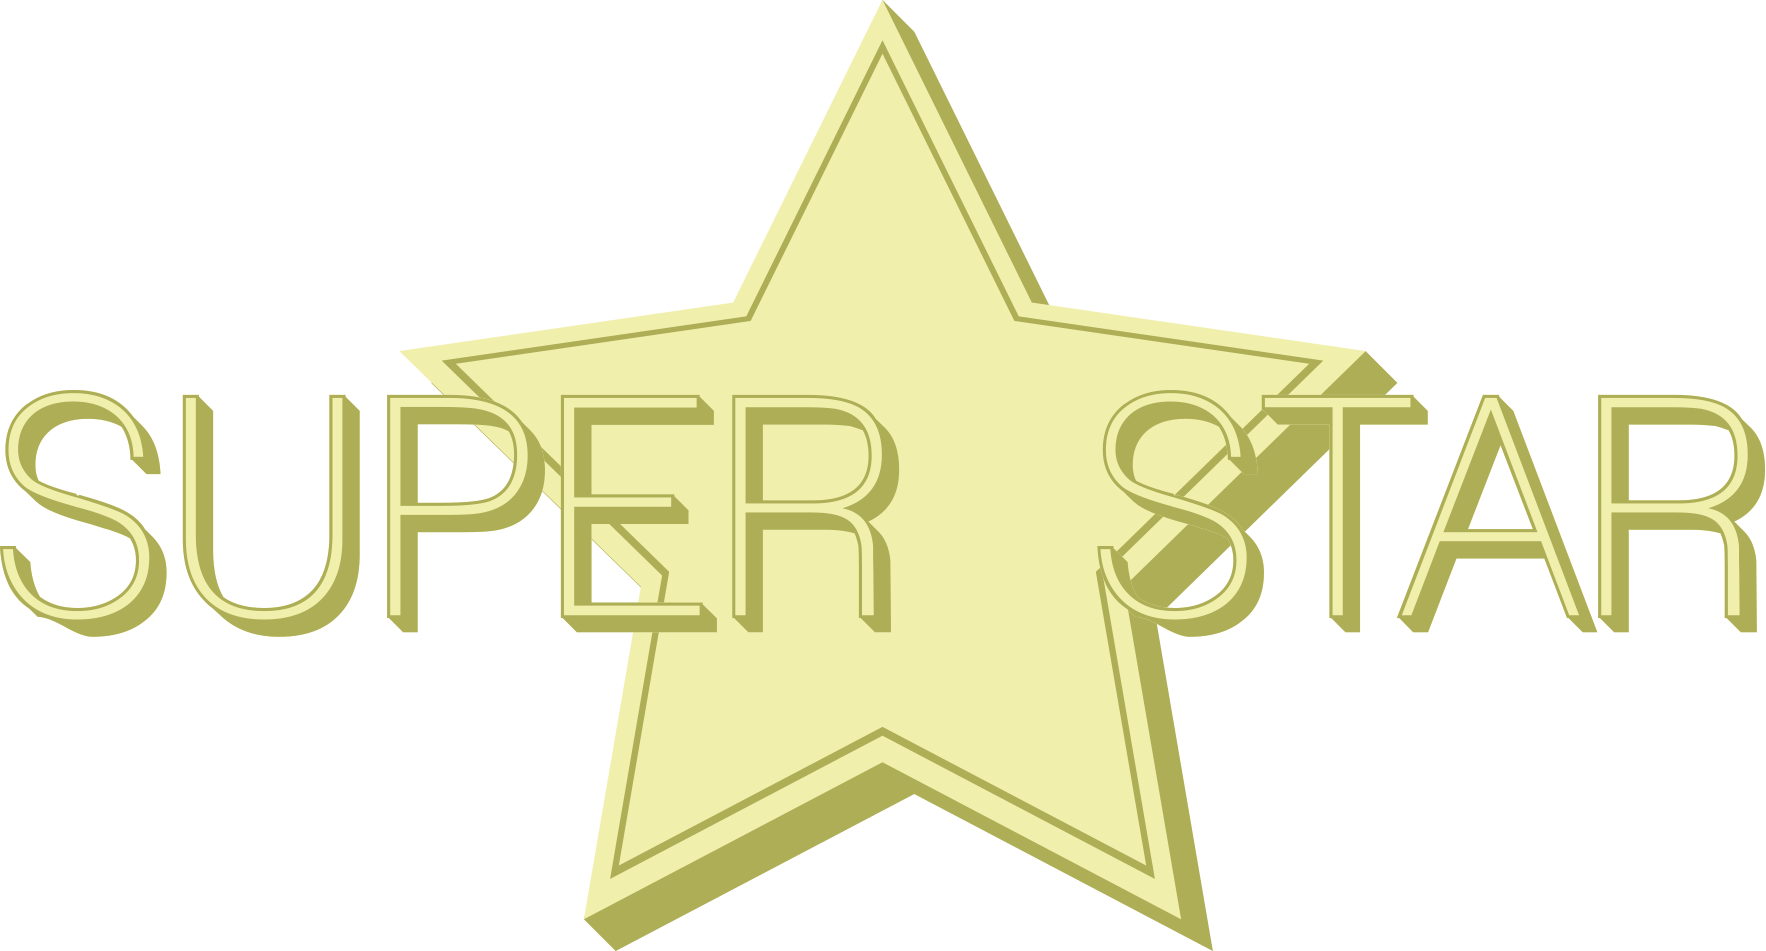 Слово звезда есть. Звезда для надписи. Суперзвезда надпись. Надпись Star со звездой. Суперстар логотип.